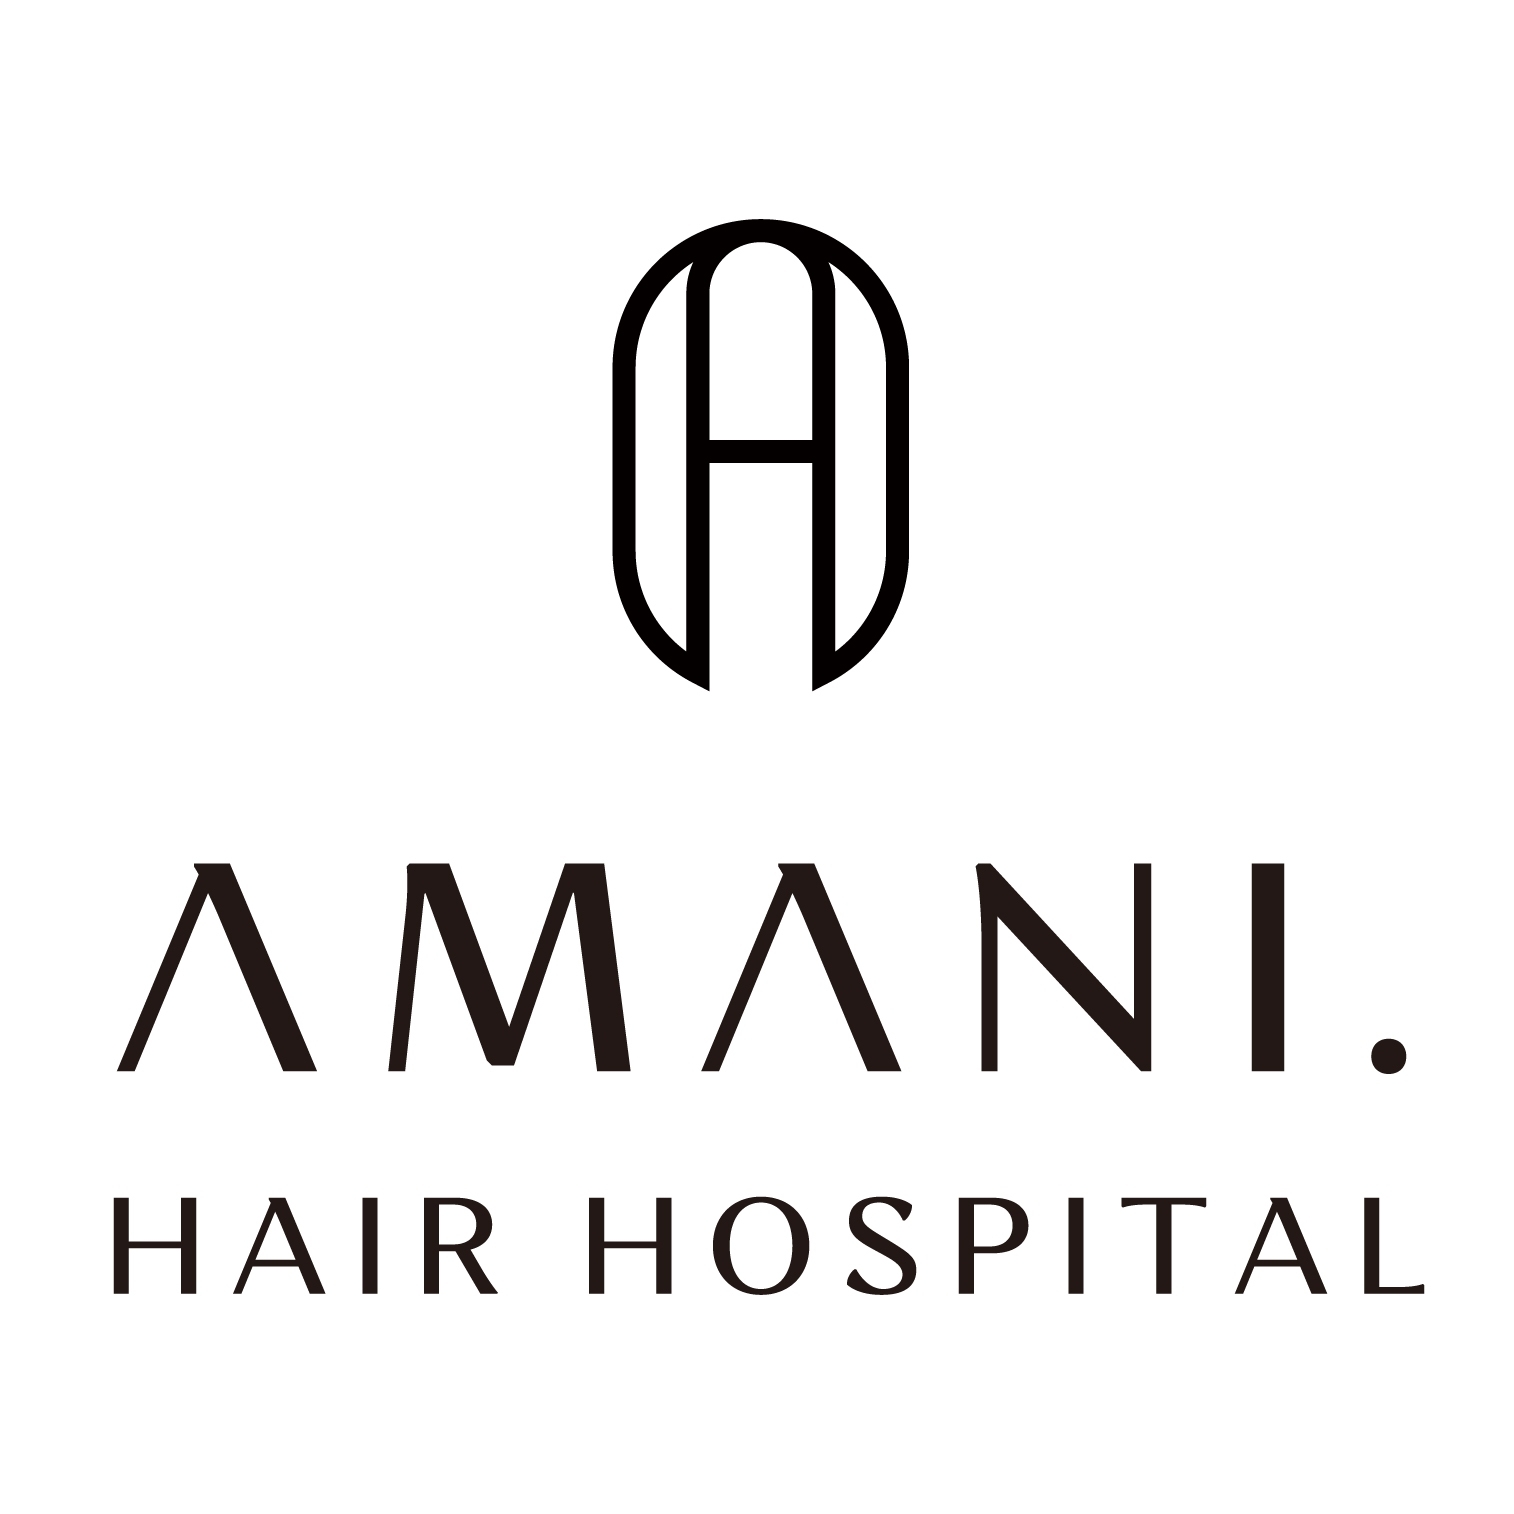 AMANI.HAIR HOSPITAL